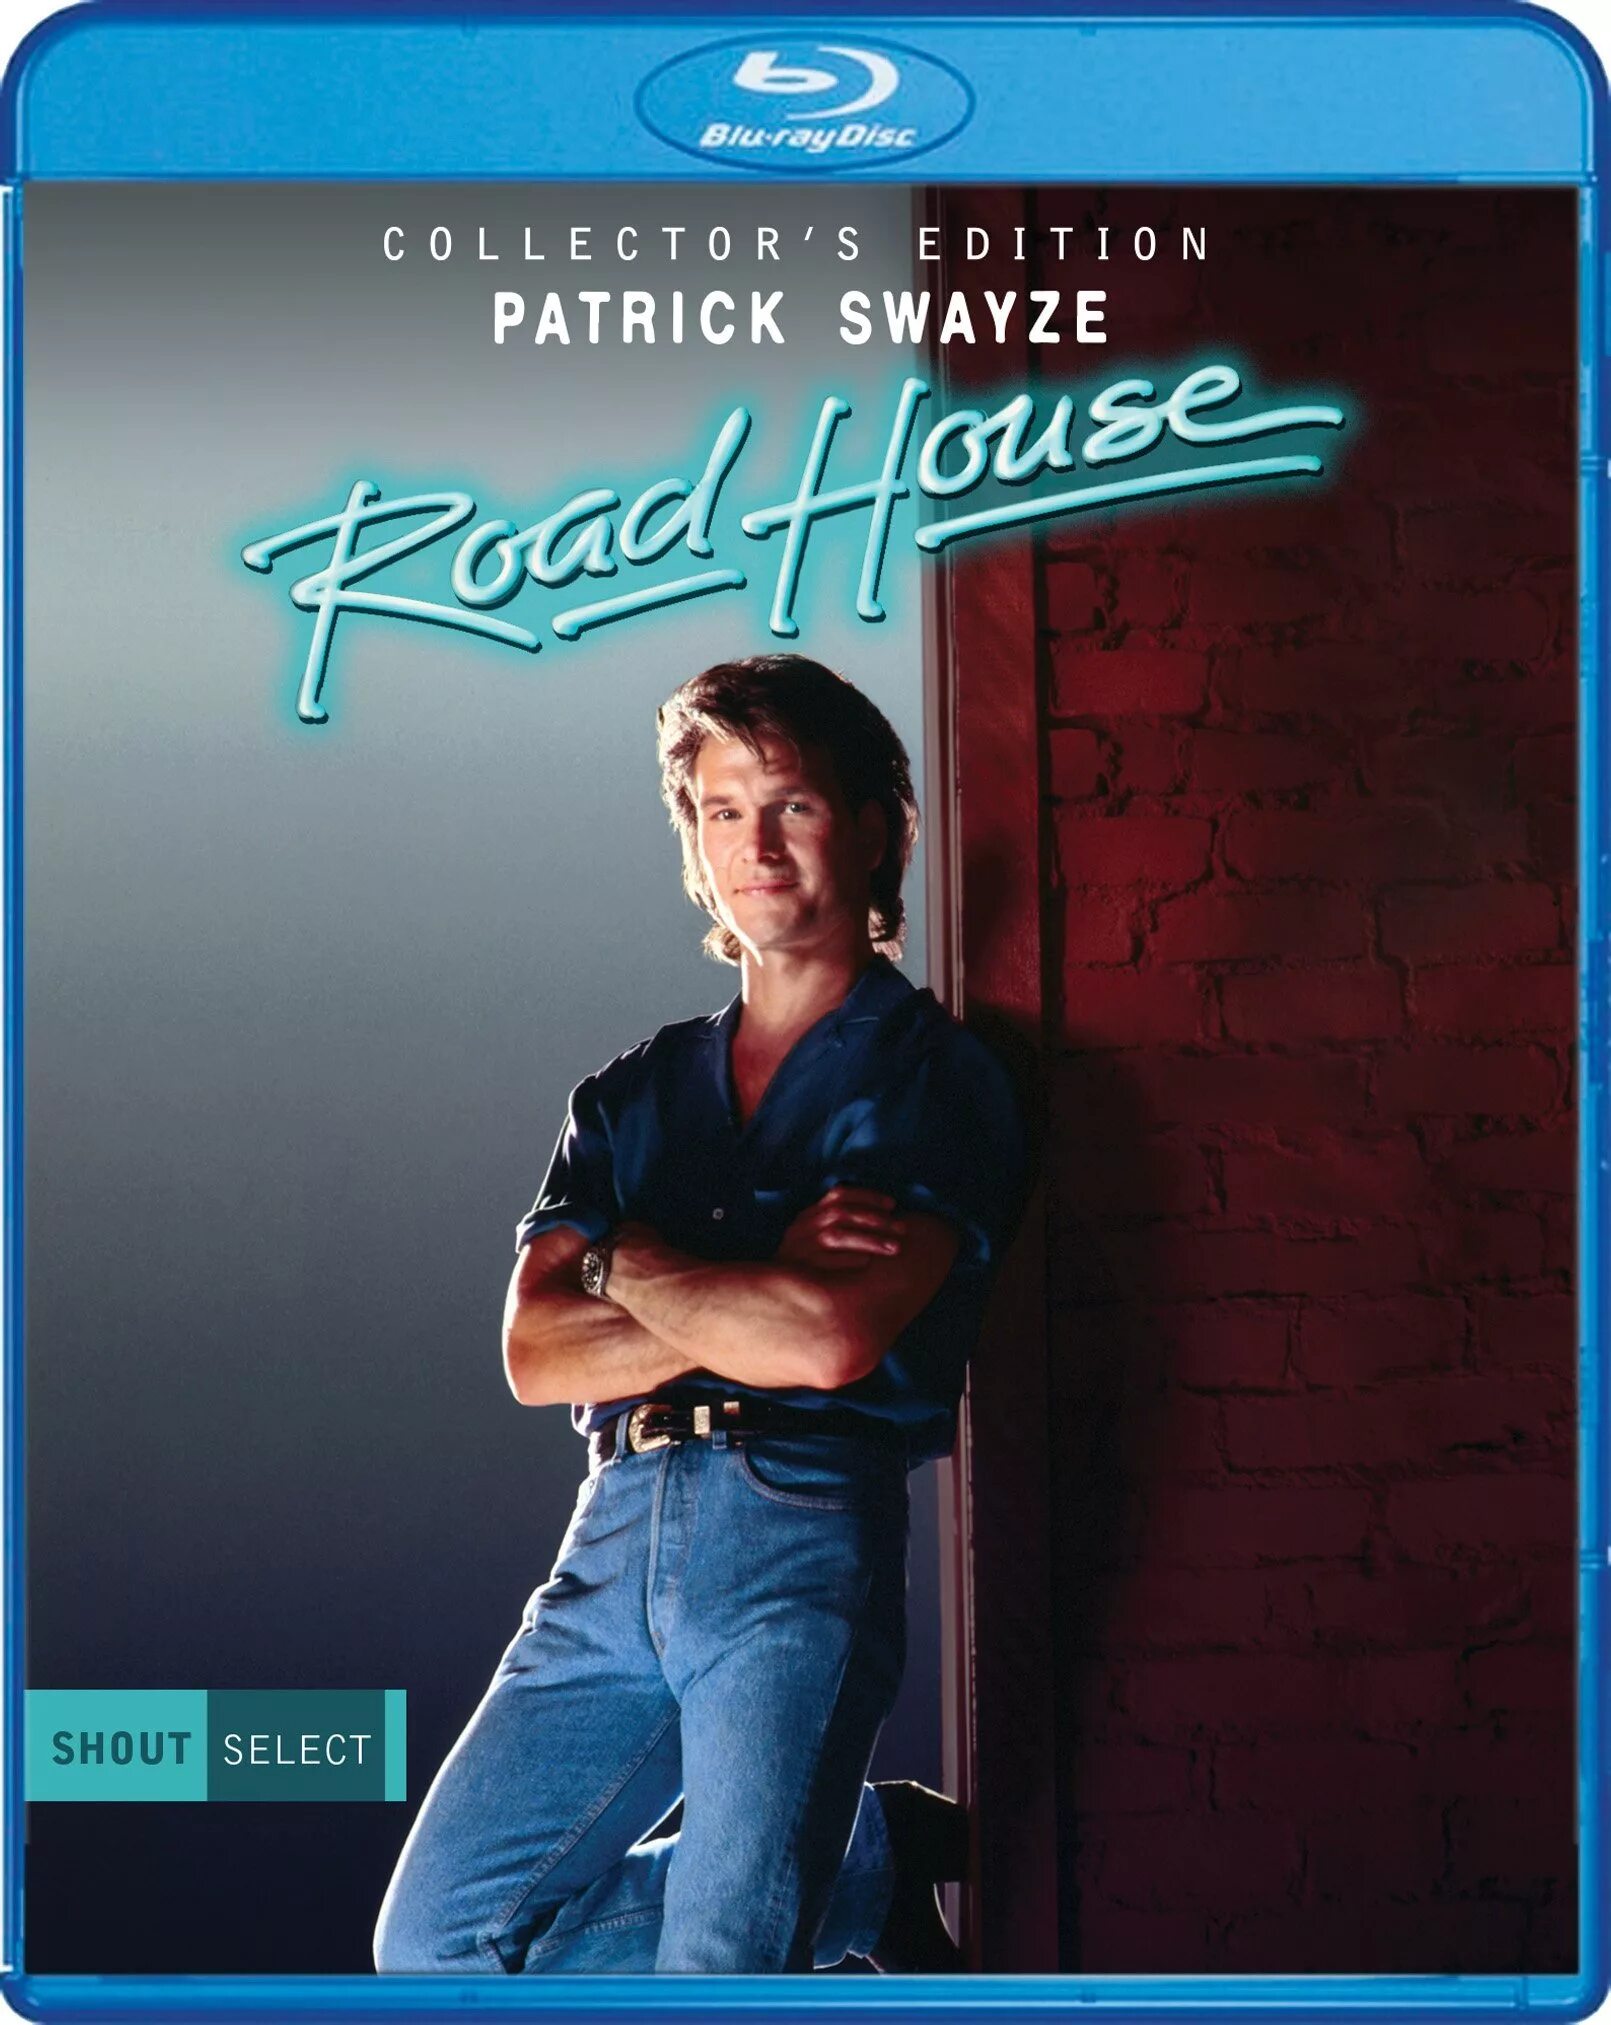 Дом у дороги road house. Патрик Суэйзи Roadhouse. Road House 1989 Blu ray. Патрик Суэйзи дом у дороги.